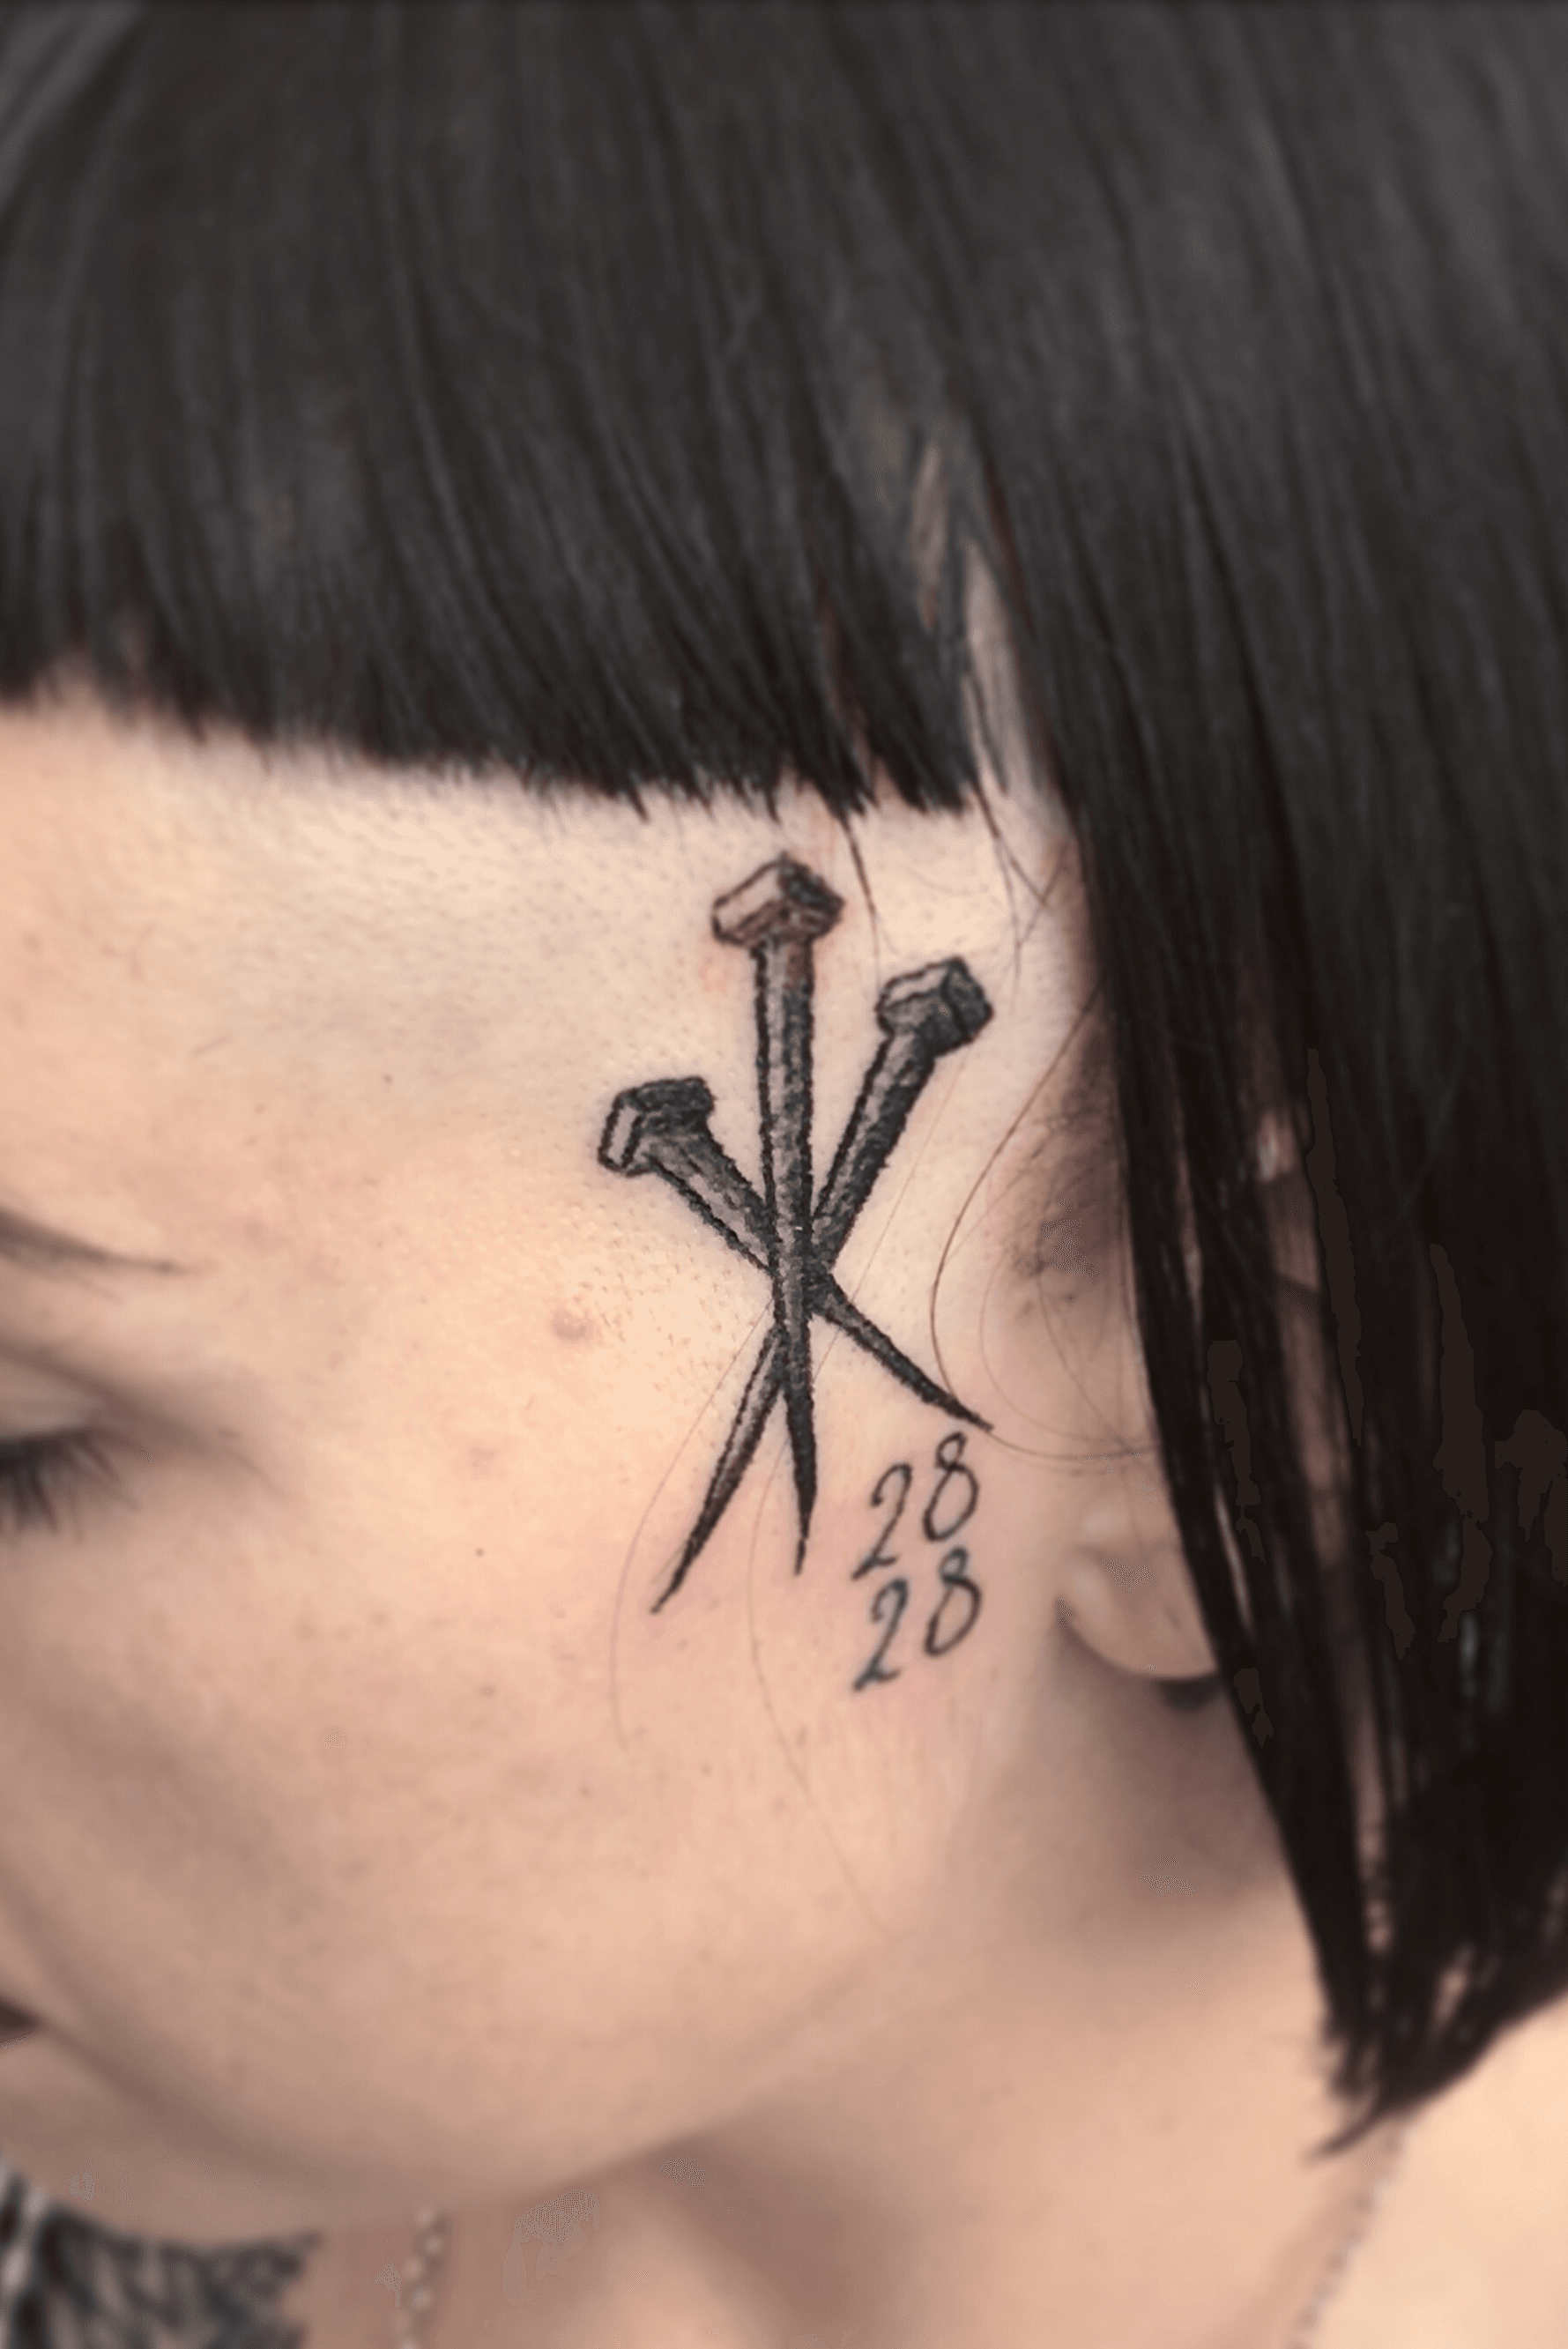 Three Nails Cross Tattoo by hassified on DeviantArt